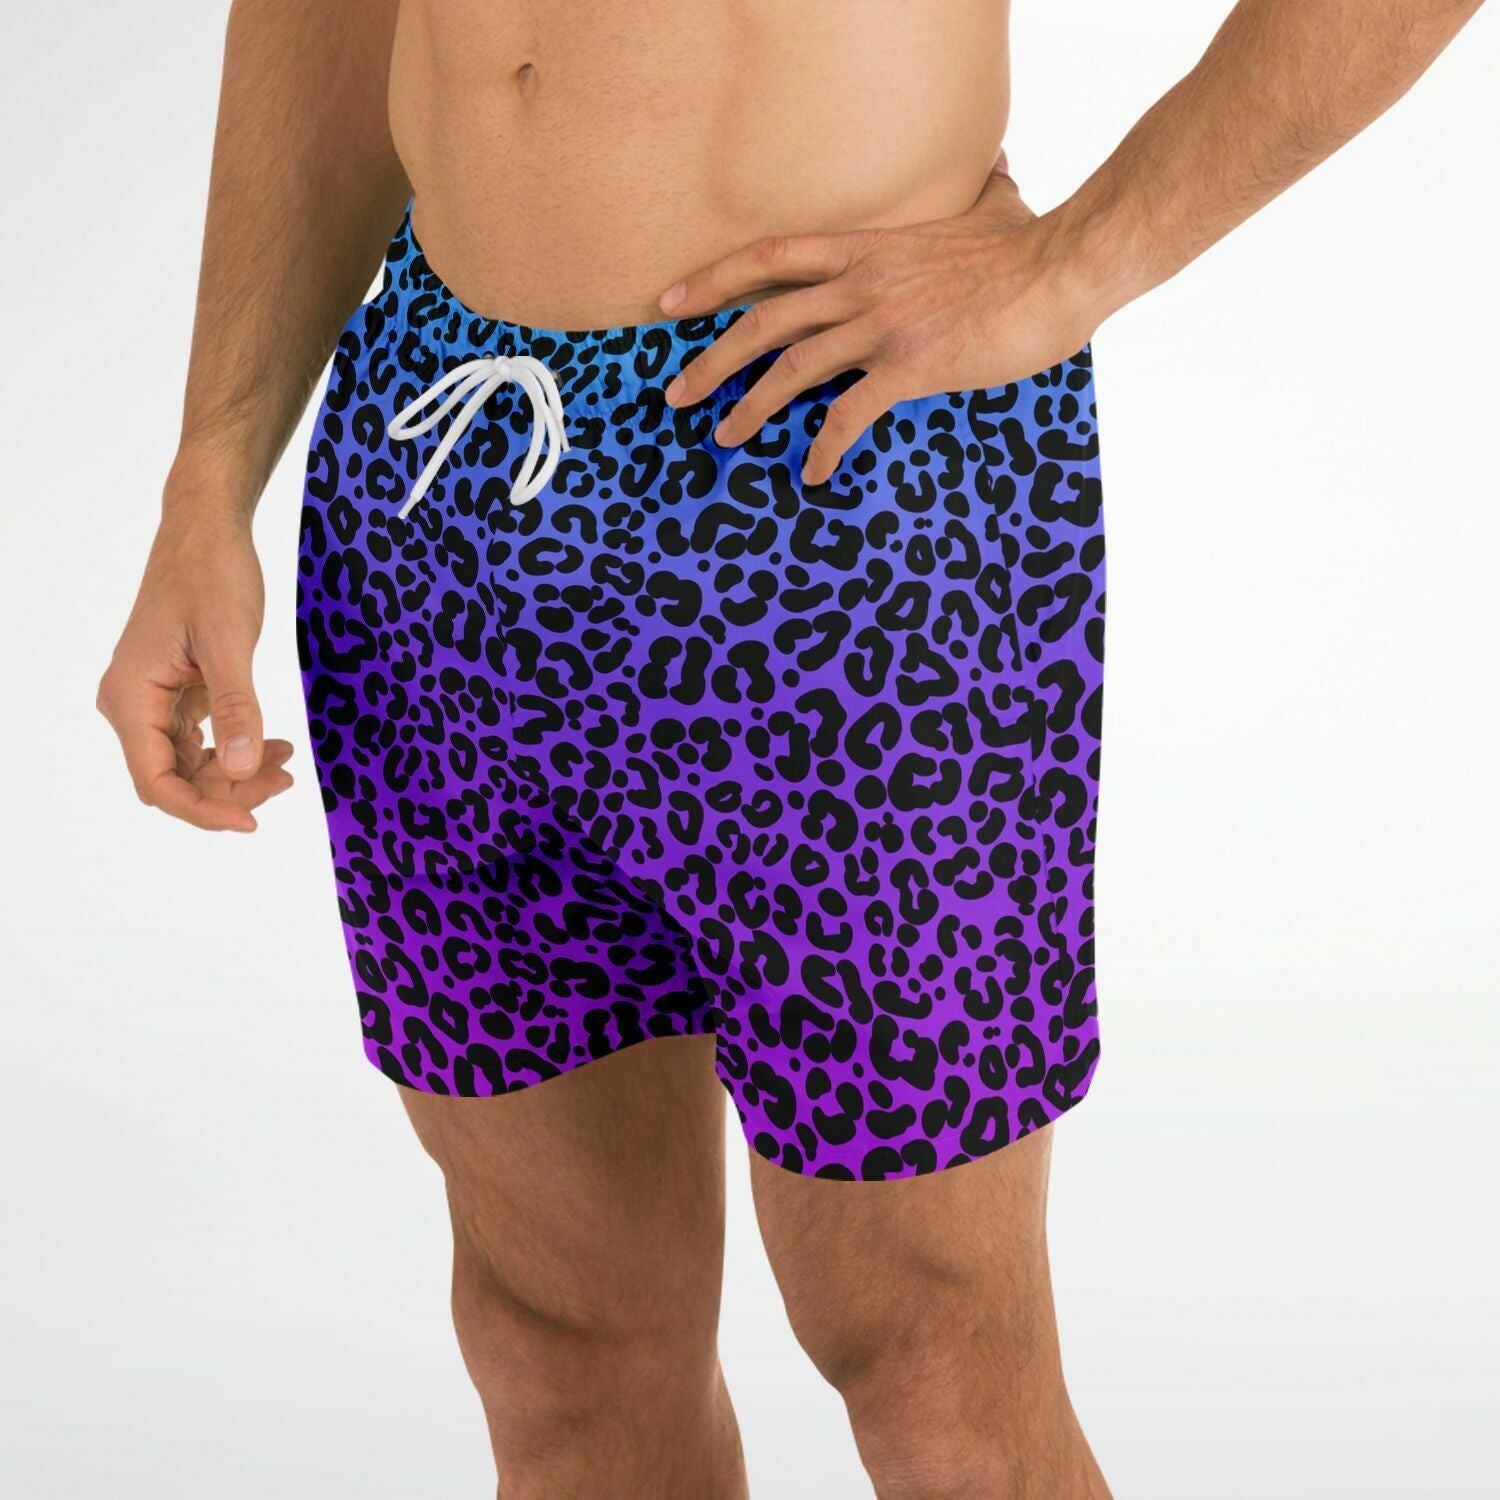 Rad Palm Men's Ombre Leopard Swim Trunks